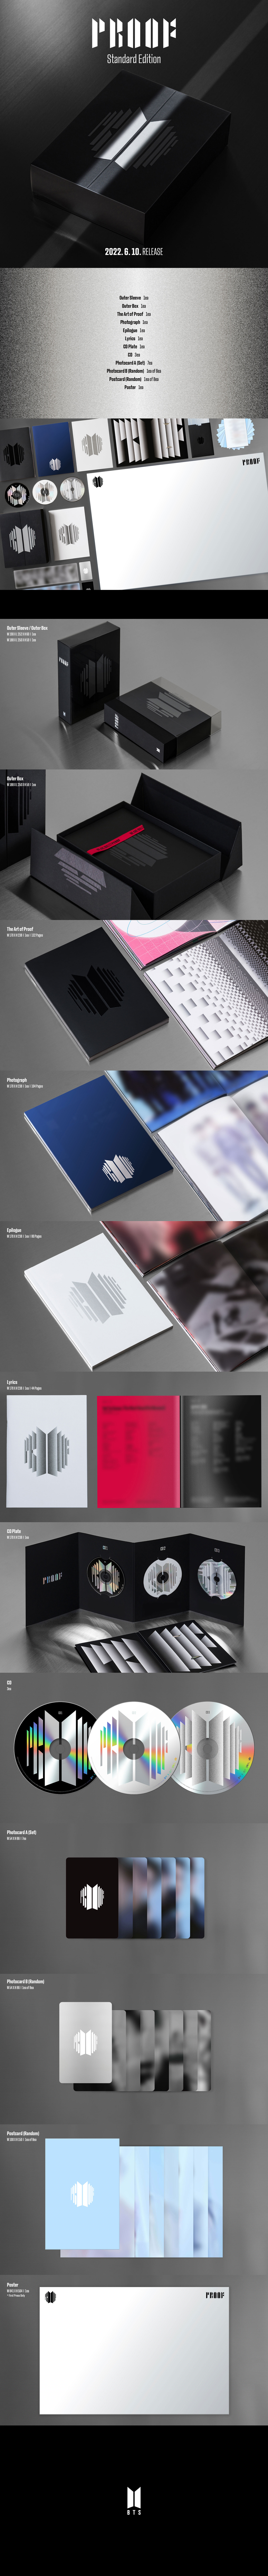 BTS - Proof (Standard Edition) - Anthology Album